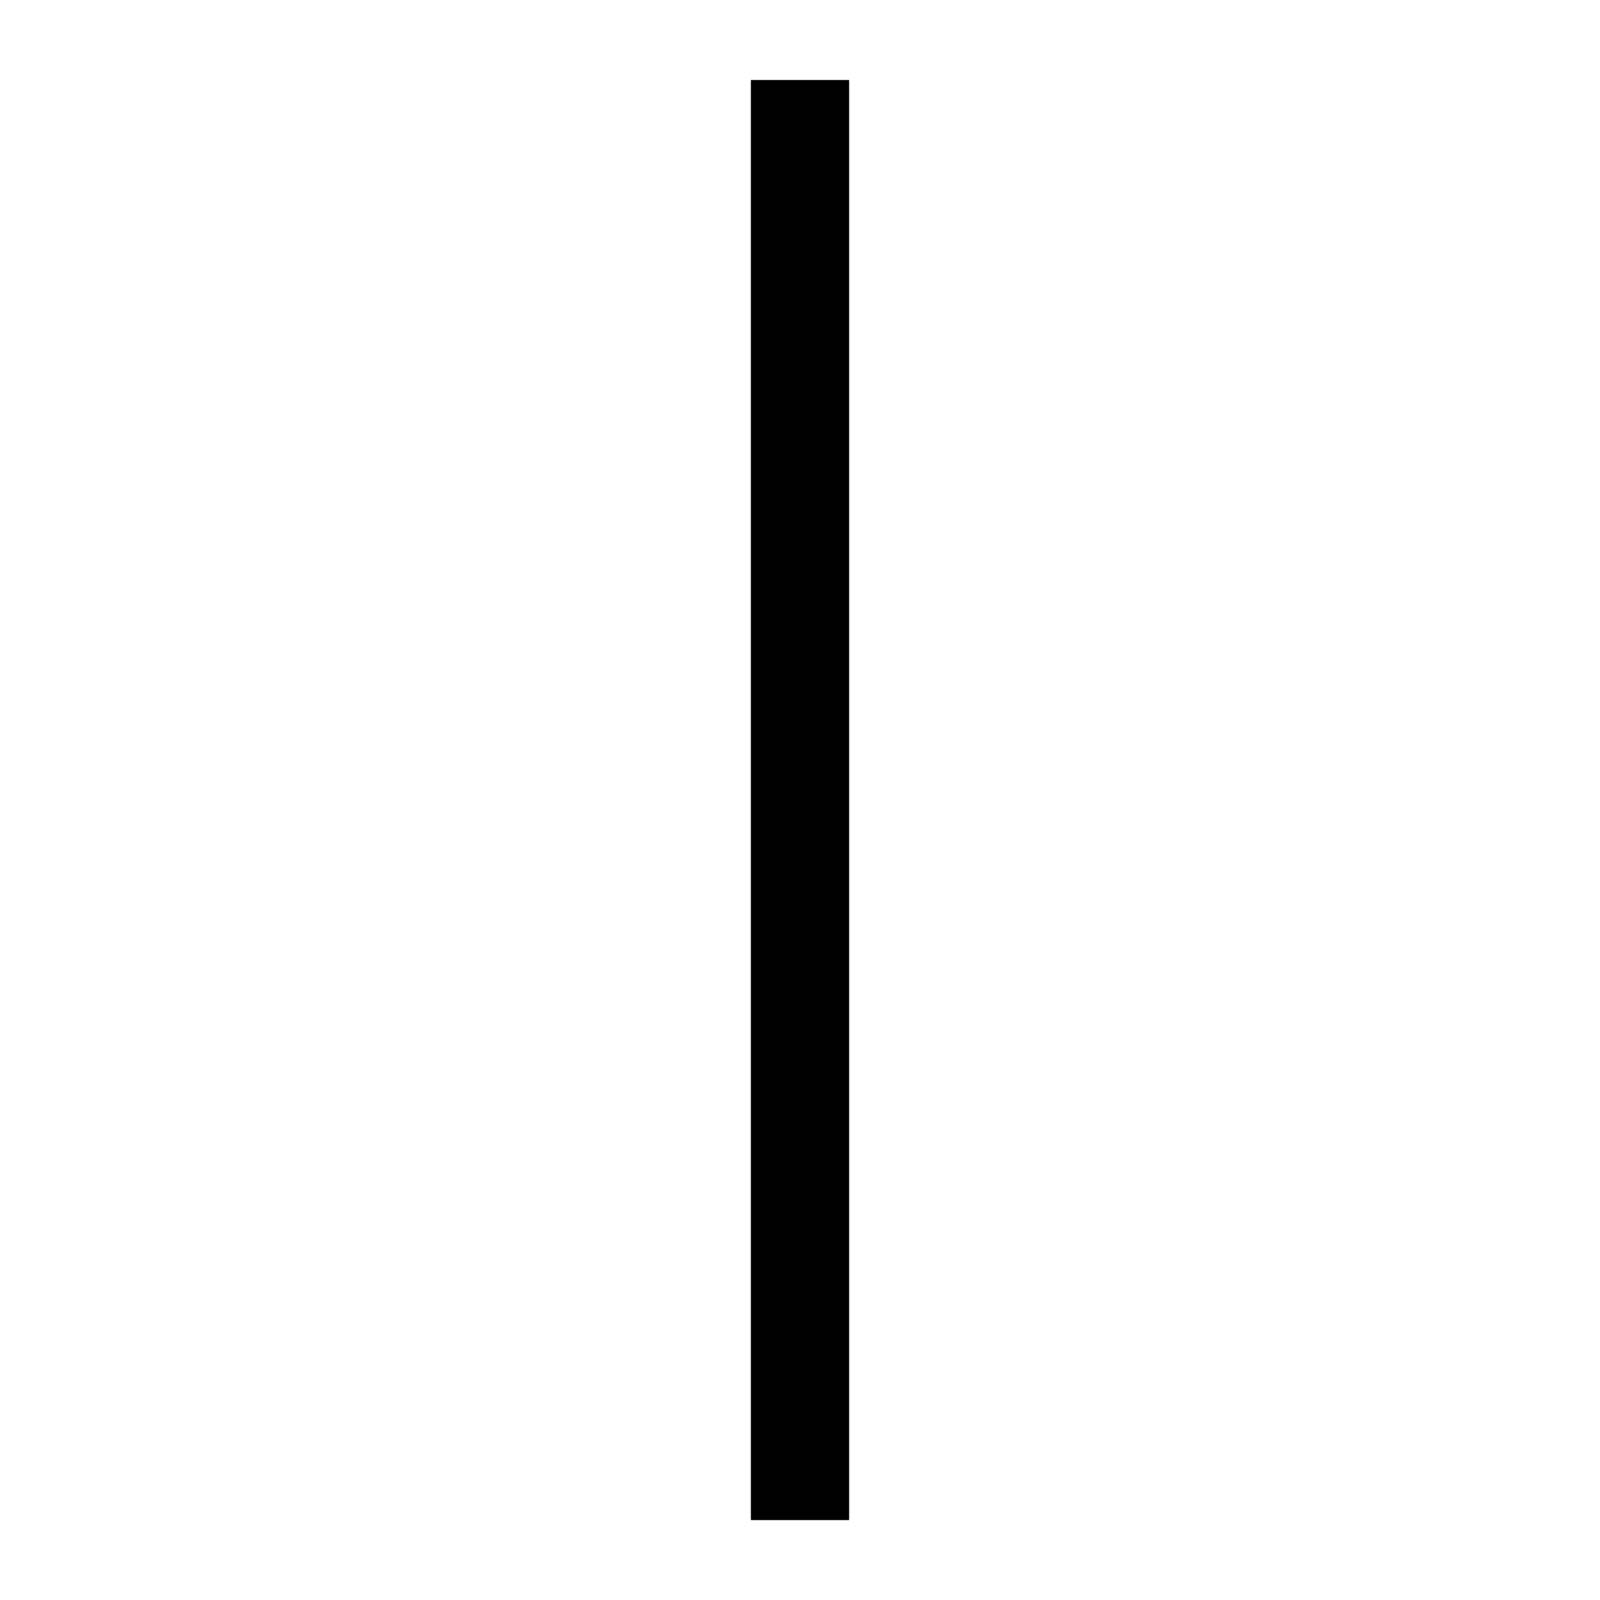 Isa rune Ice freeze symbol icon black color vector illustration flat style simple image